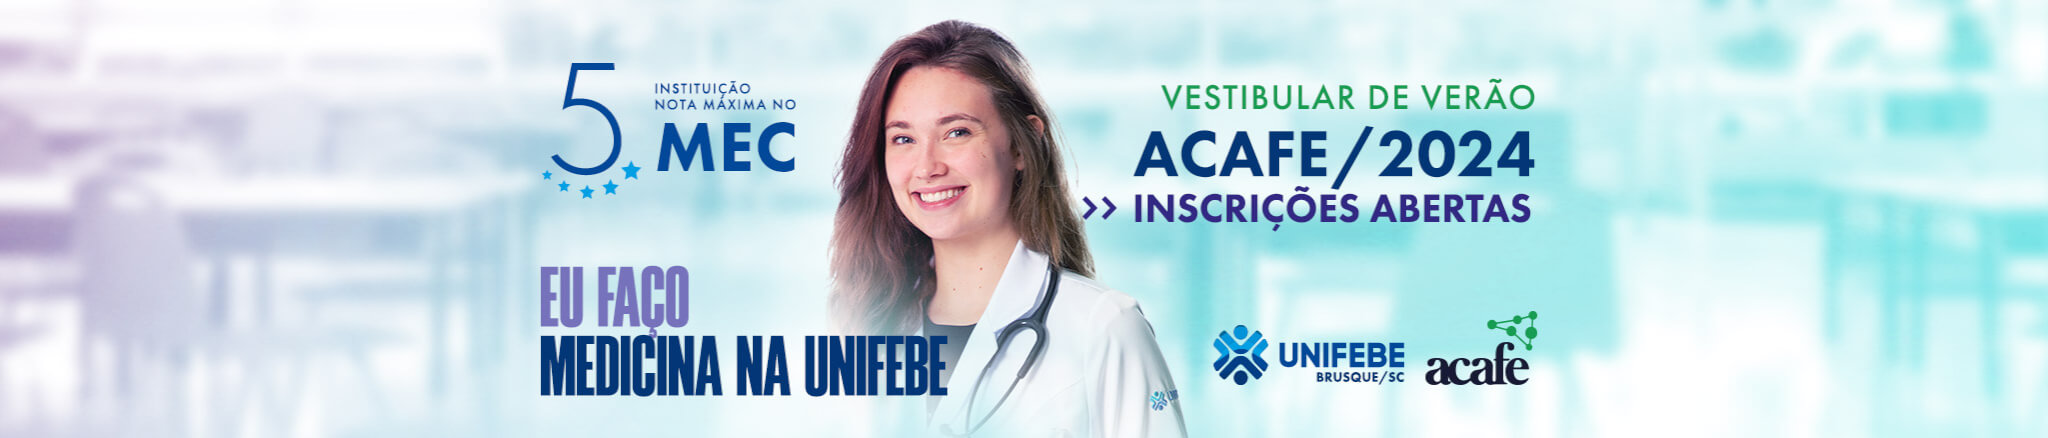 ref2-Unifebe-Vestibular-Medicina-Verão-24-Geral-BannerDesk-InscriçõesAbertas-B